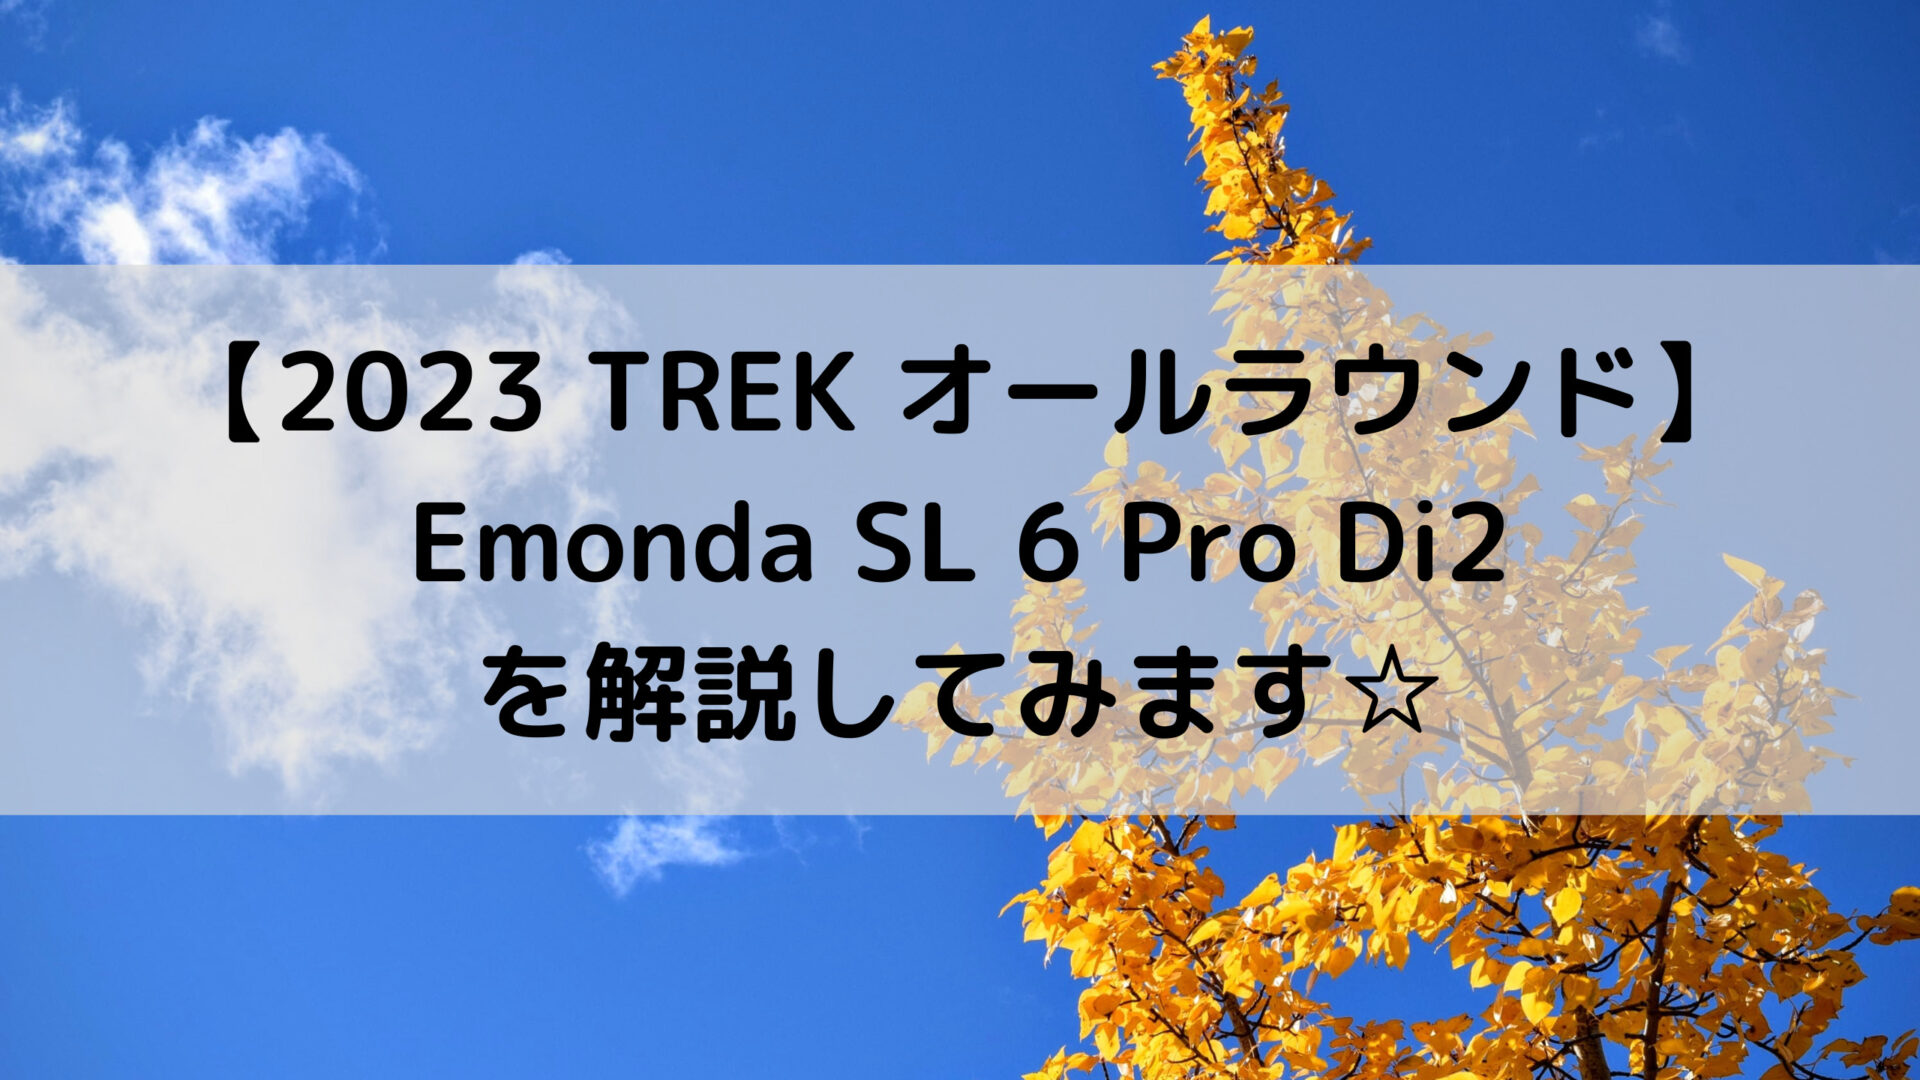 【2023 TREK オールラウンド】Emonda SL 6 Pro Di2を解説してみます☆